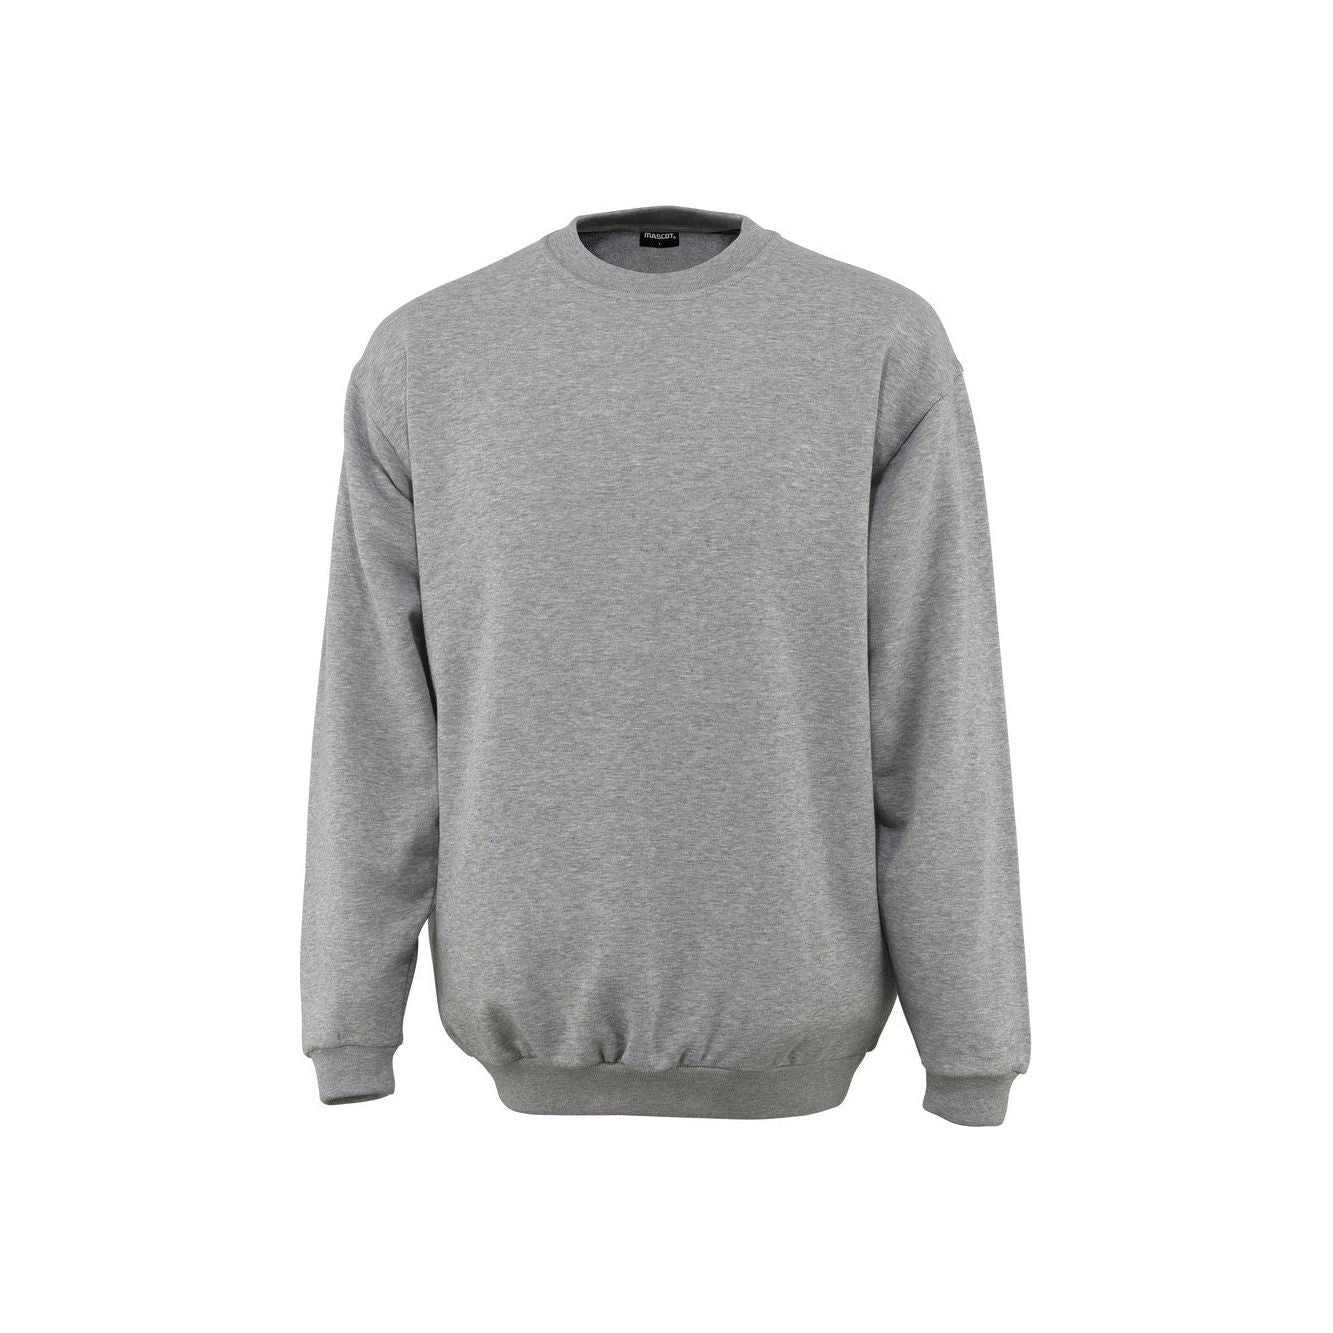 Mascot Caribien Sweatshirt Warm-Soft Grey 00784-280-08 Front